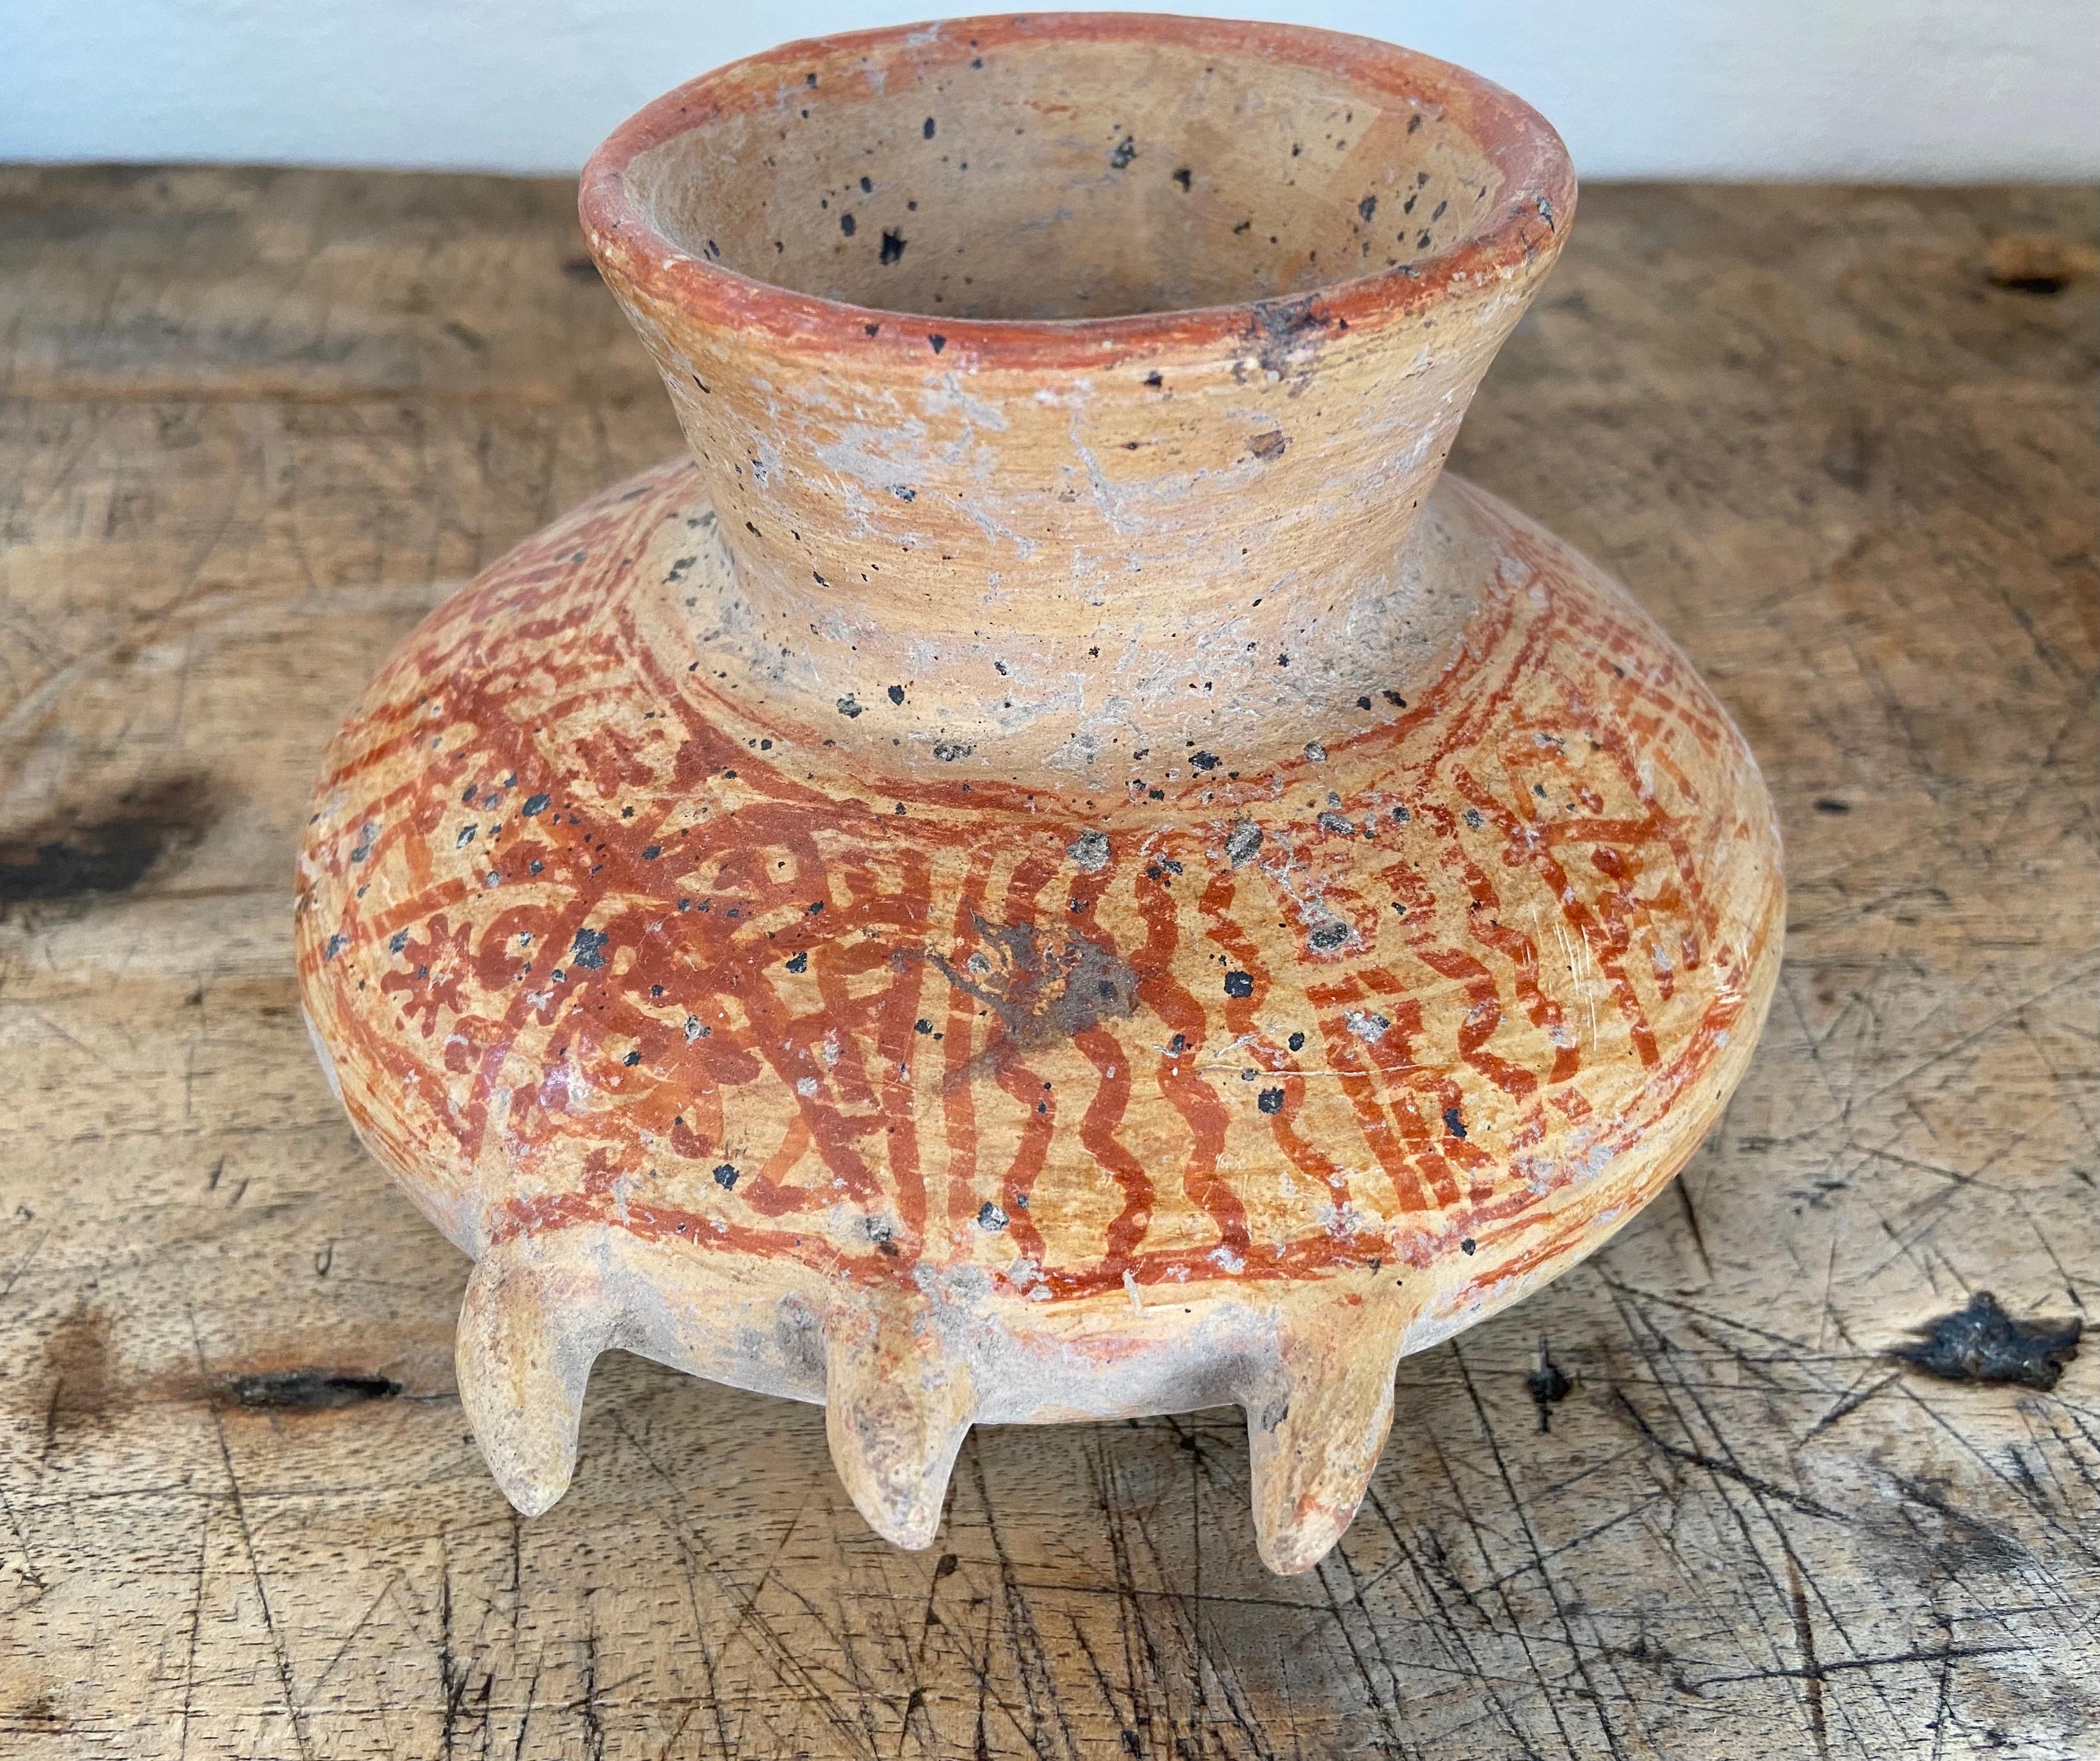 Pre-Columbian Prehispanic Ceramic Turtle Vessel from Mexico, Date Unknown